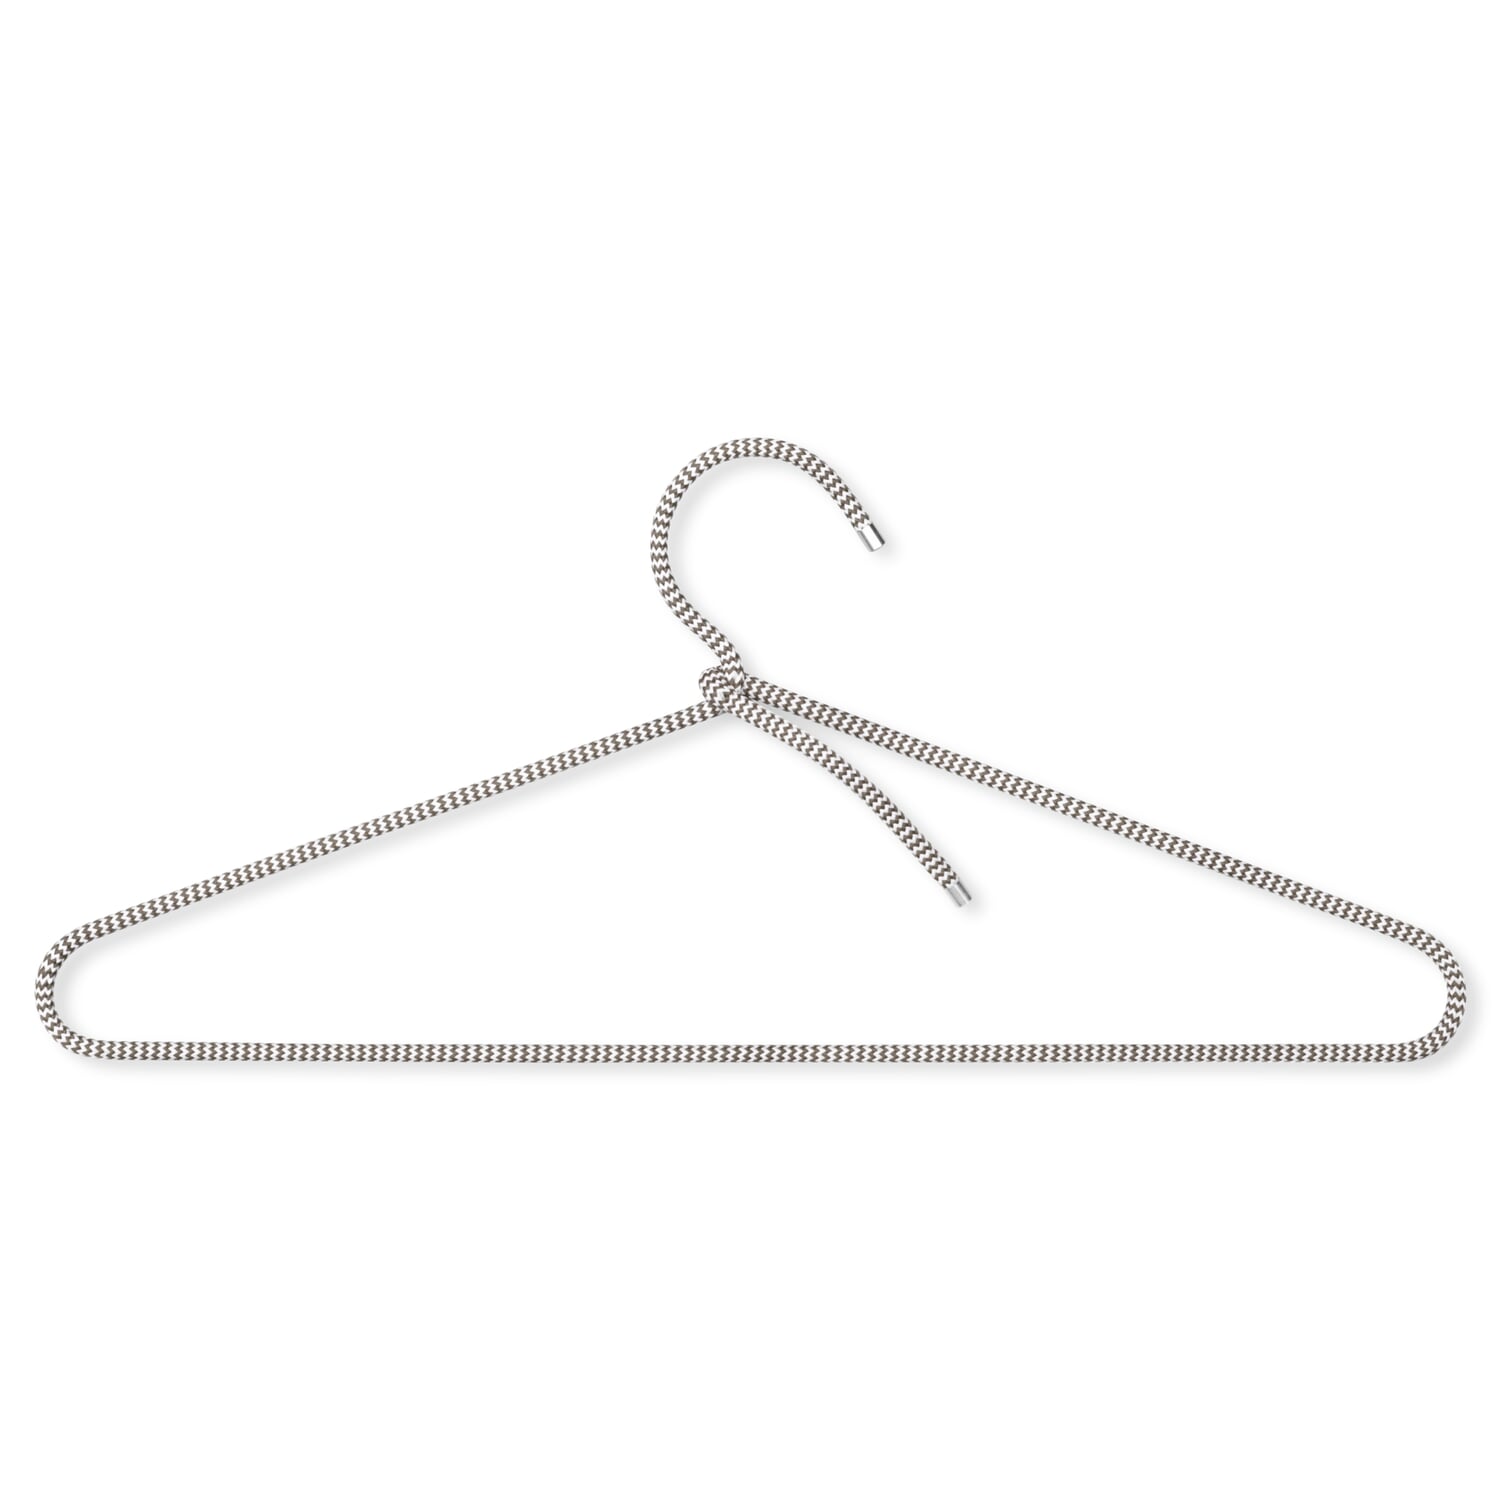 https://assets.manufactum.de/p/204/204498/204498_01.jpg/coat-hanger-cord-hanger.jpg?profile=pdsmain_1500